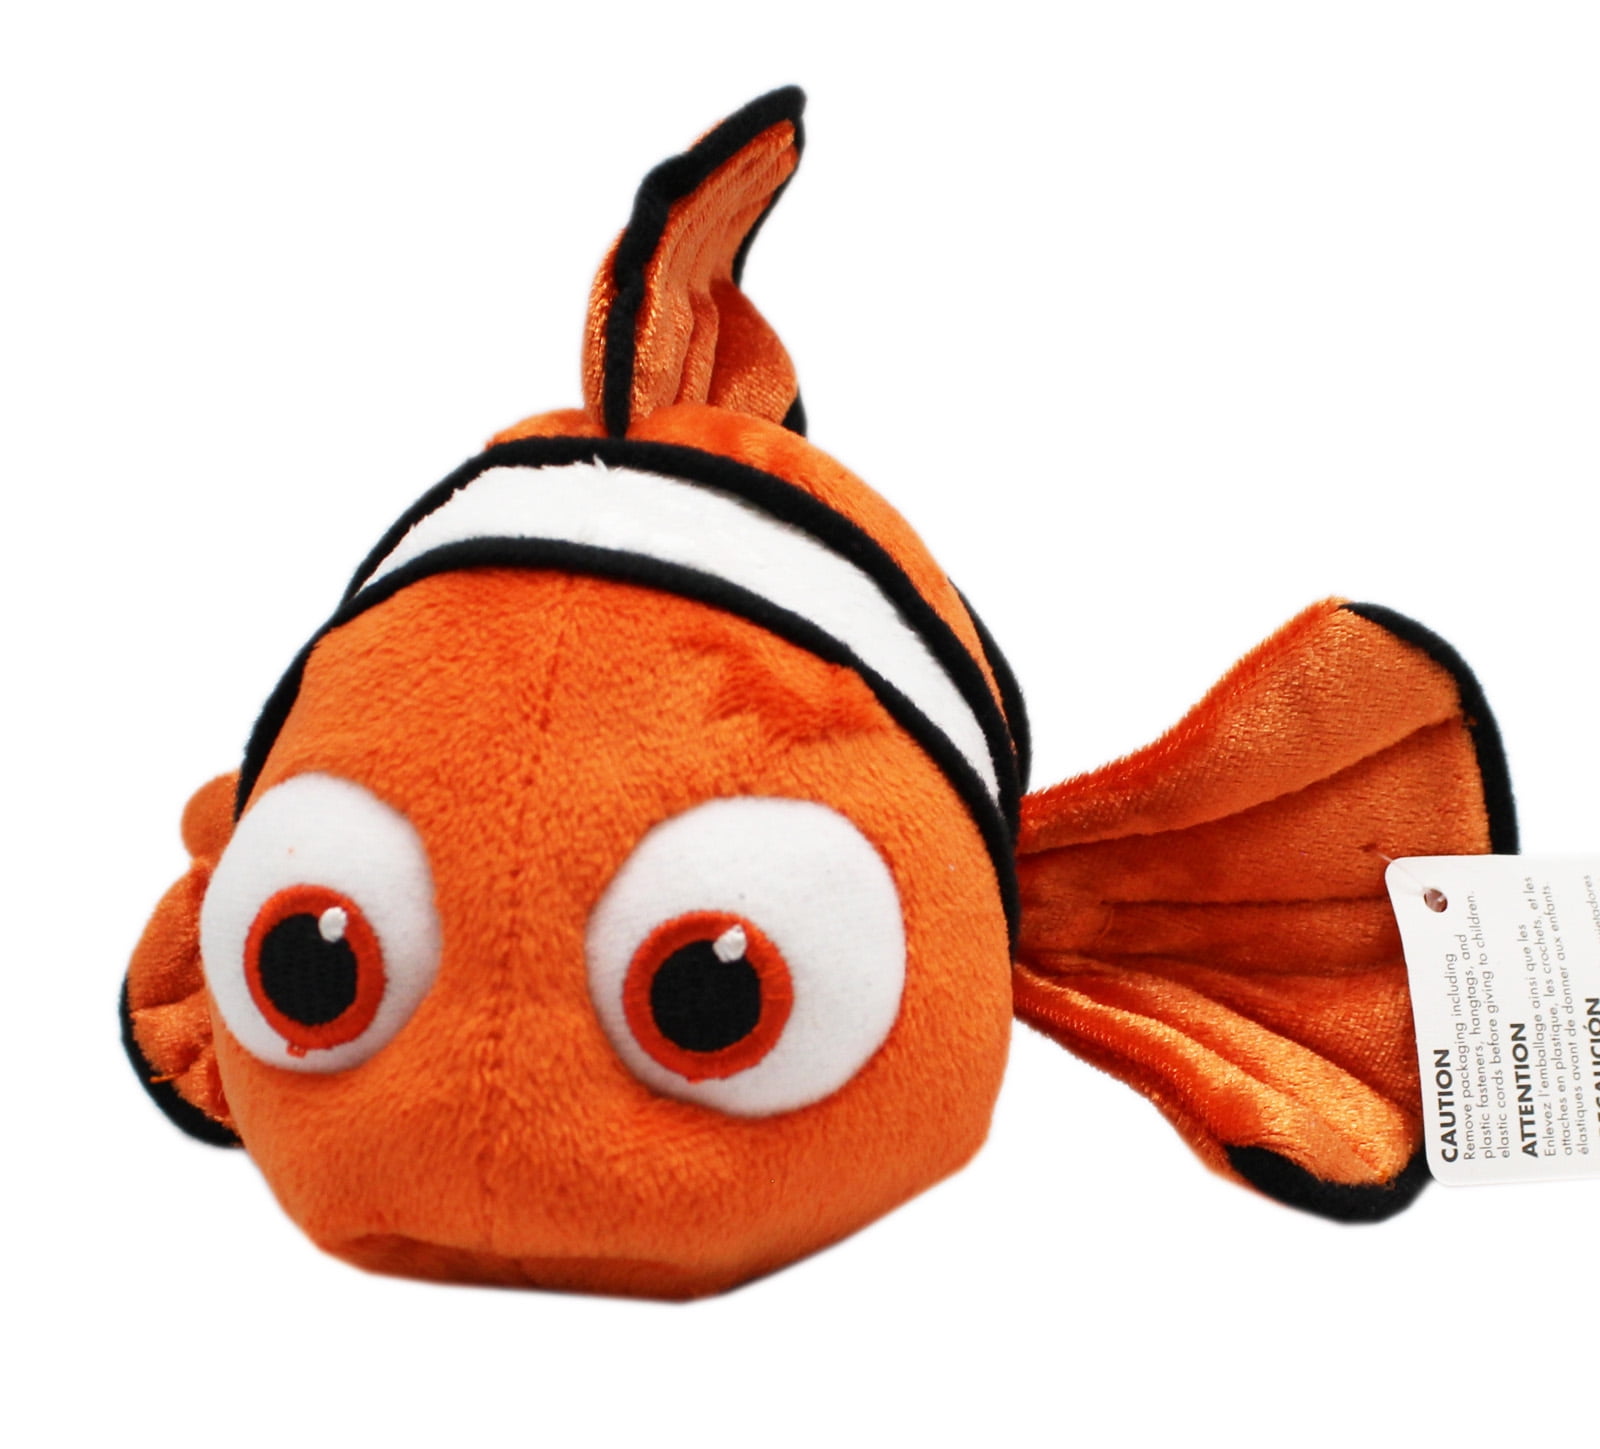 Disney Pixar's Finding Nemo Small Size Nemo Kids Plush Toy (4in) -  